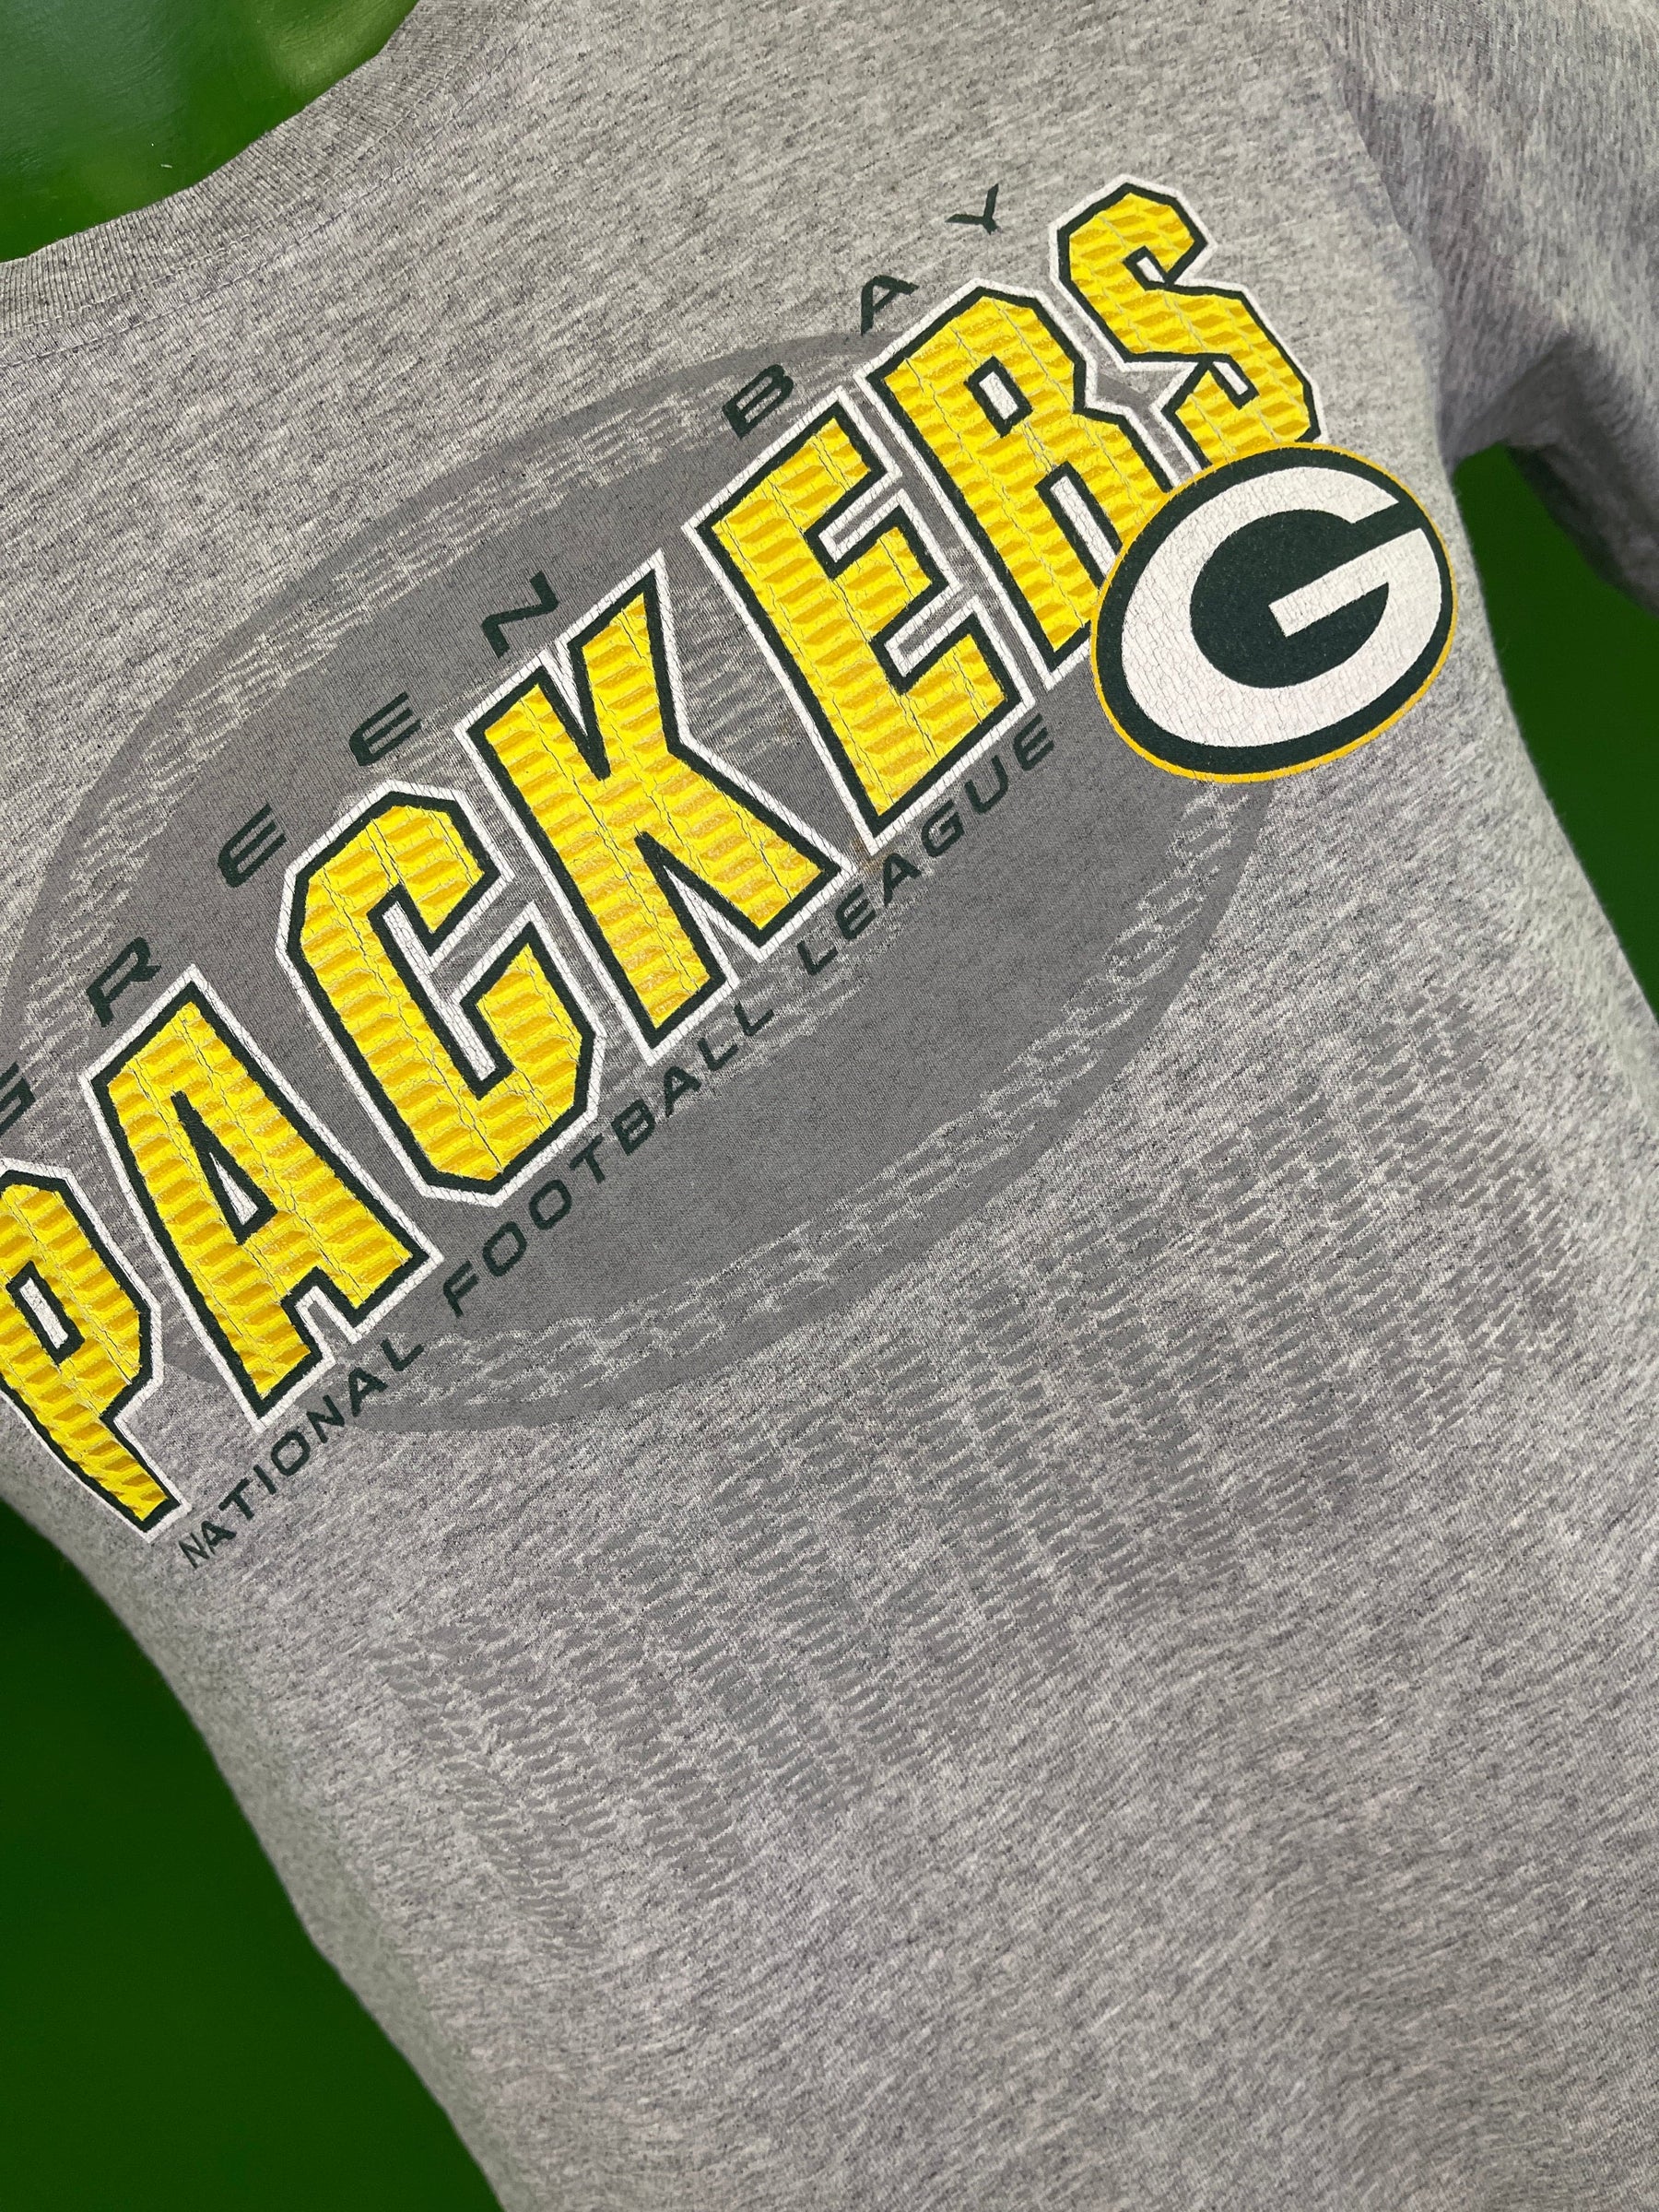 NFL Green Bay Packers Heathered Grey T-Shirt Youth Medium 10-12